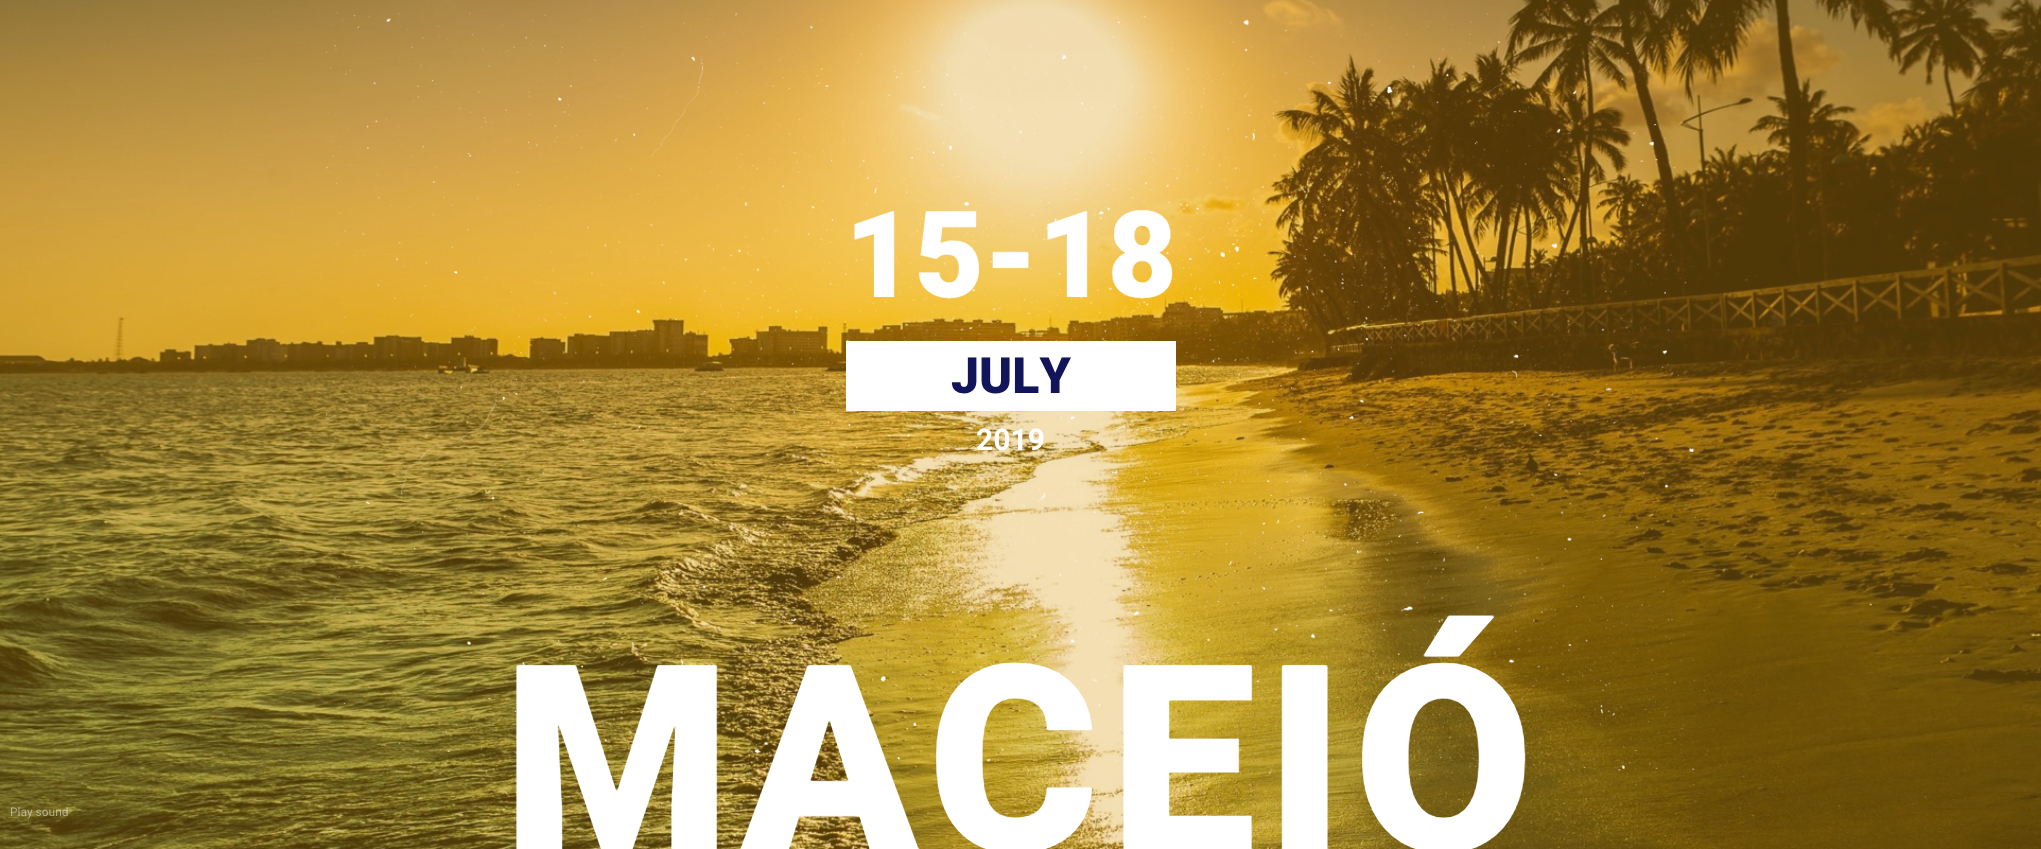 ICALT 2019, Maceio, Brazil